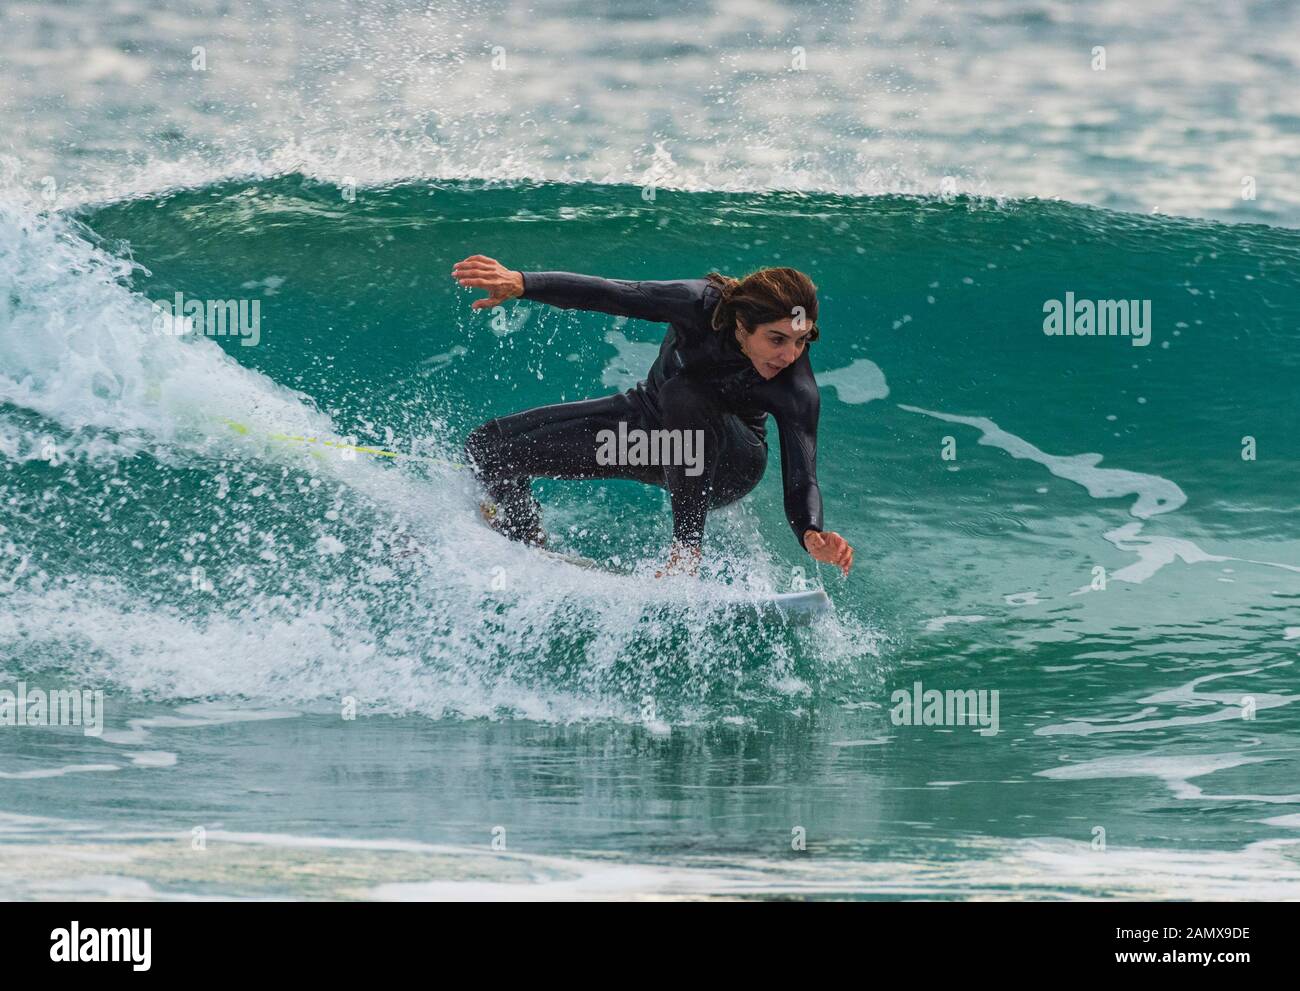 Woman surfer. Stock Photo